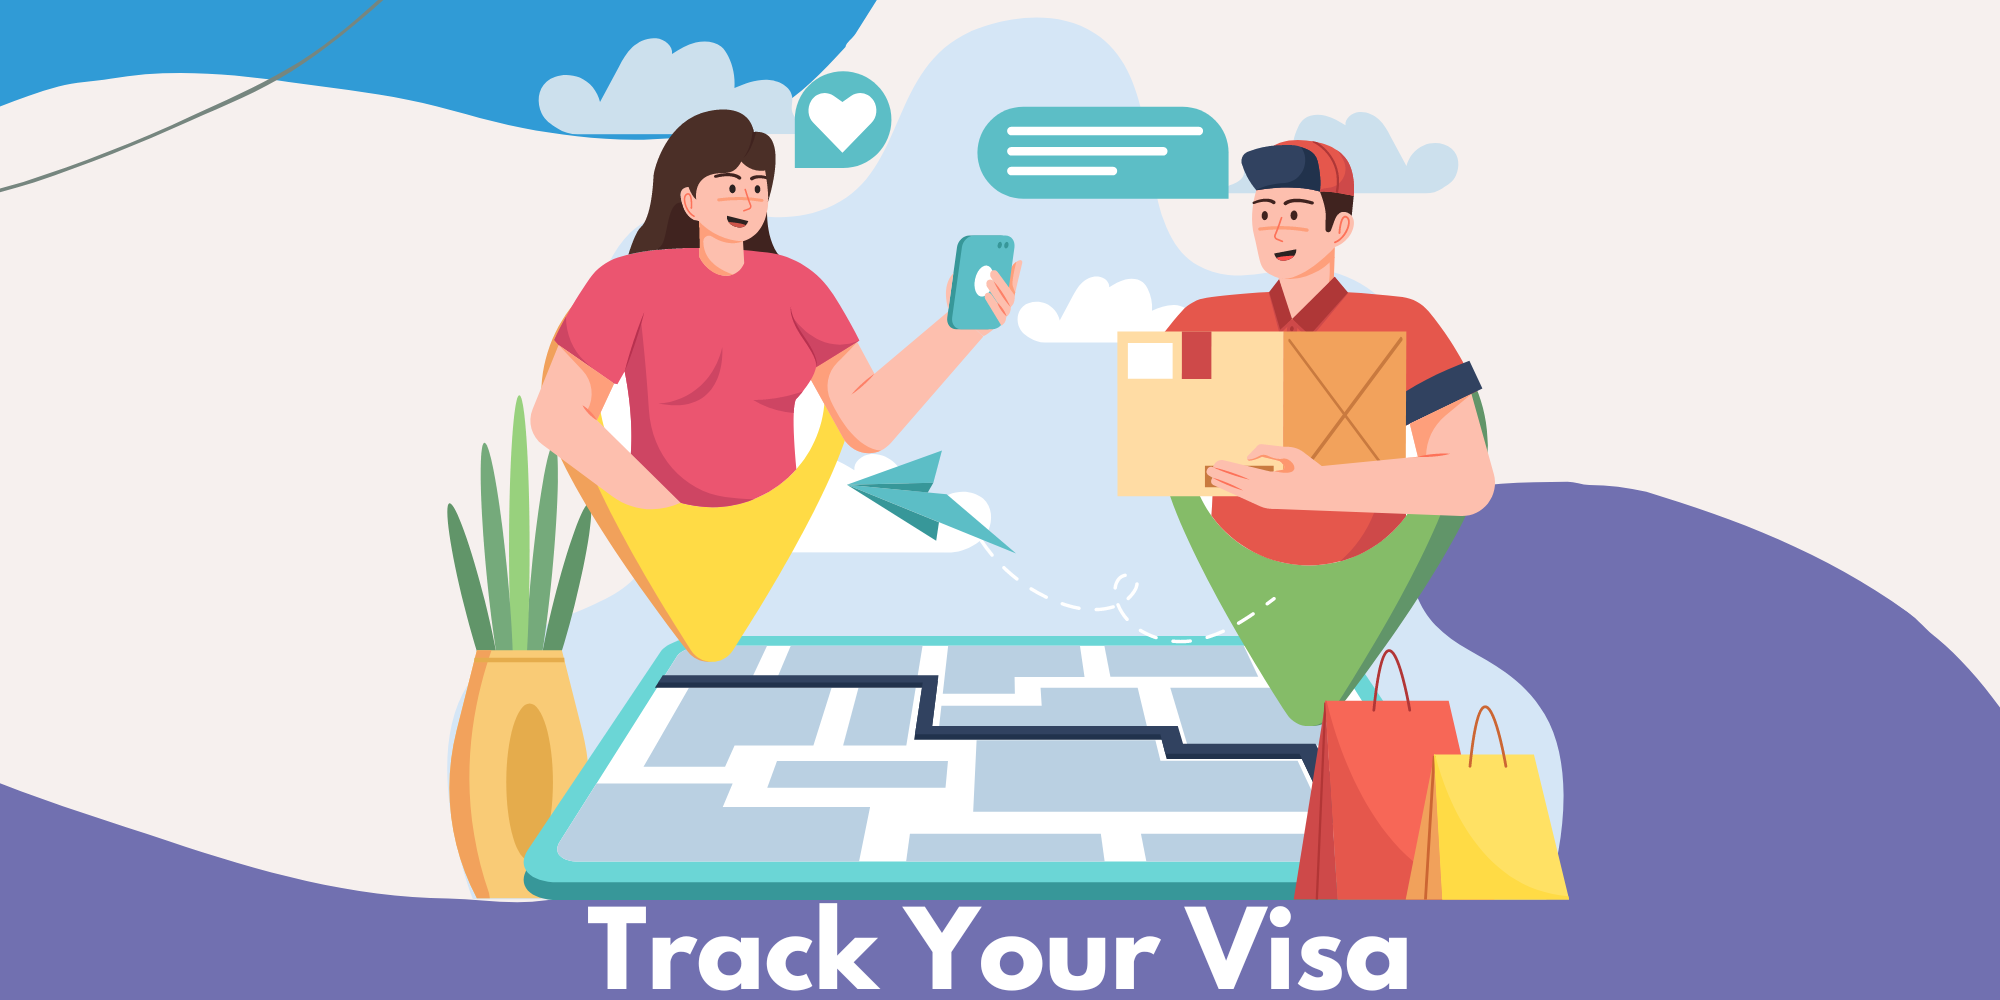 Track Your Visa